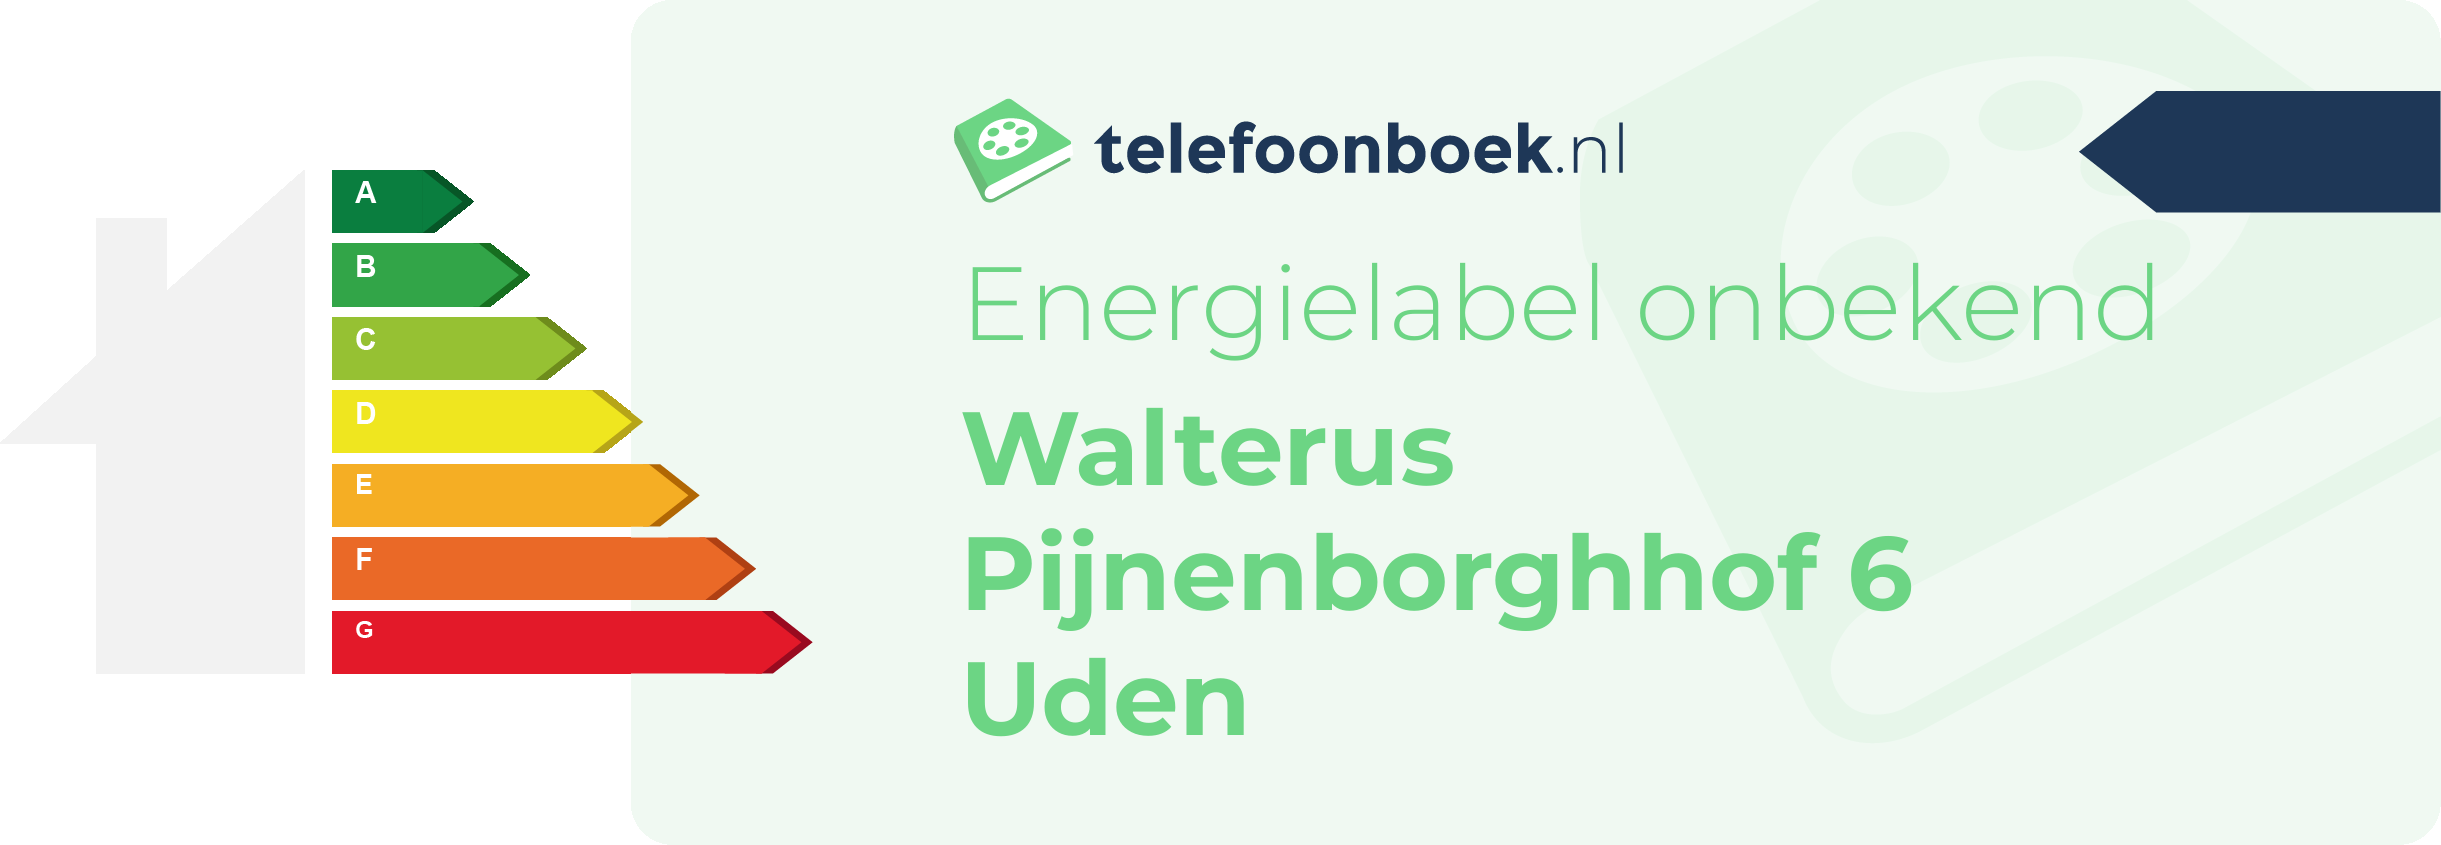 Energielabel Walterus Pijnenborghhof 6 Uden